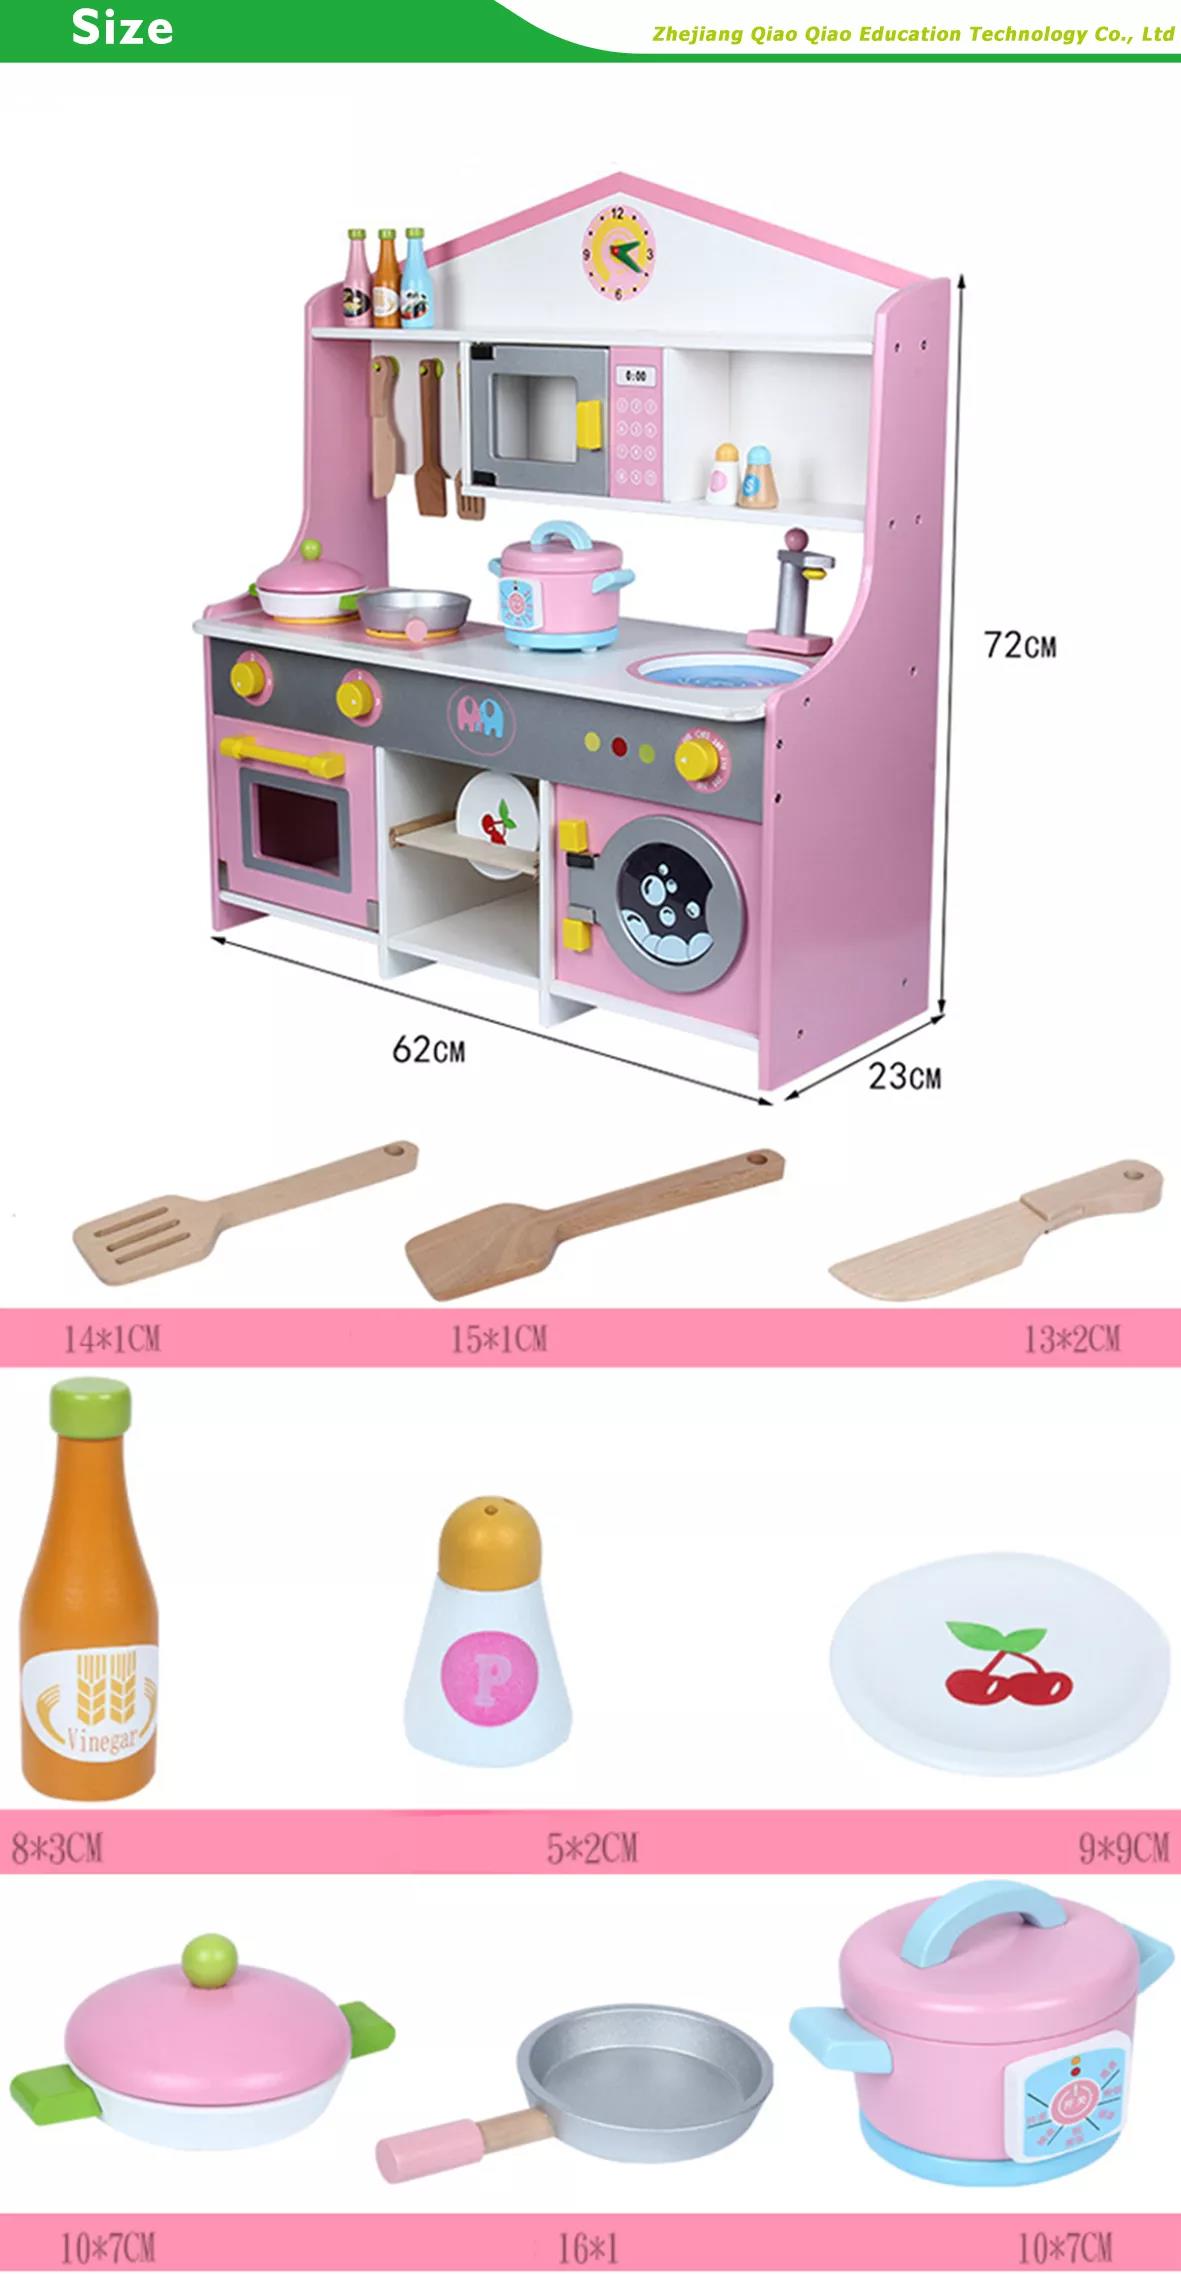 QiaoQiao kids pretend toy kitchen set size